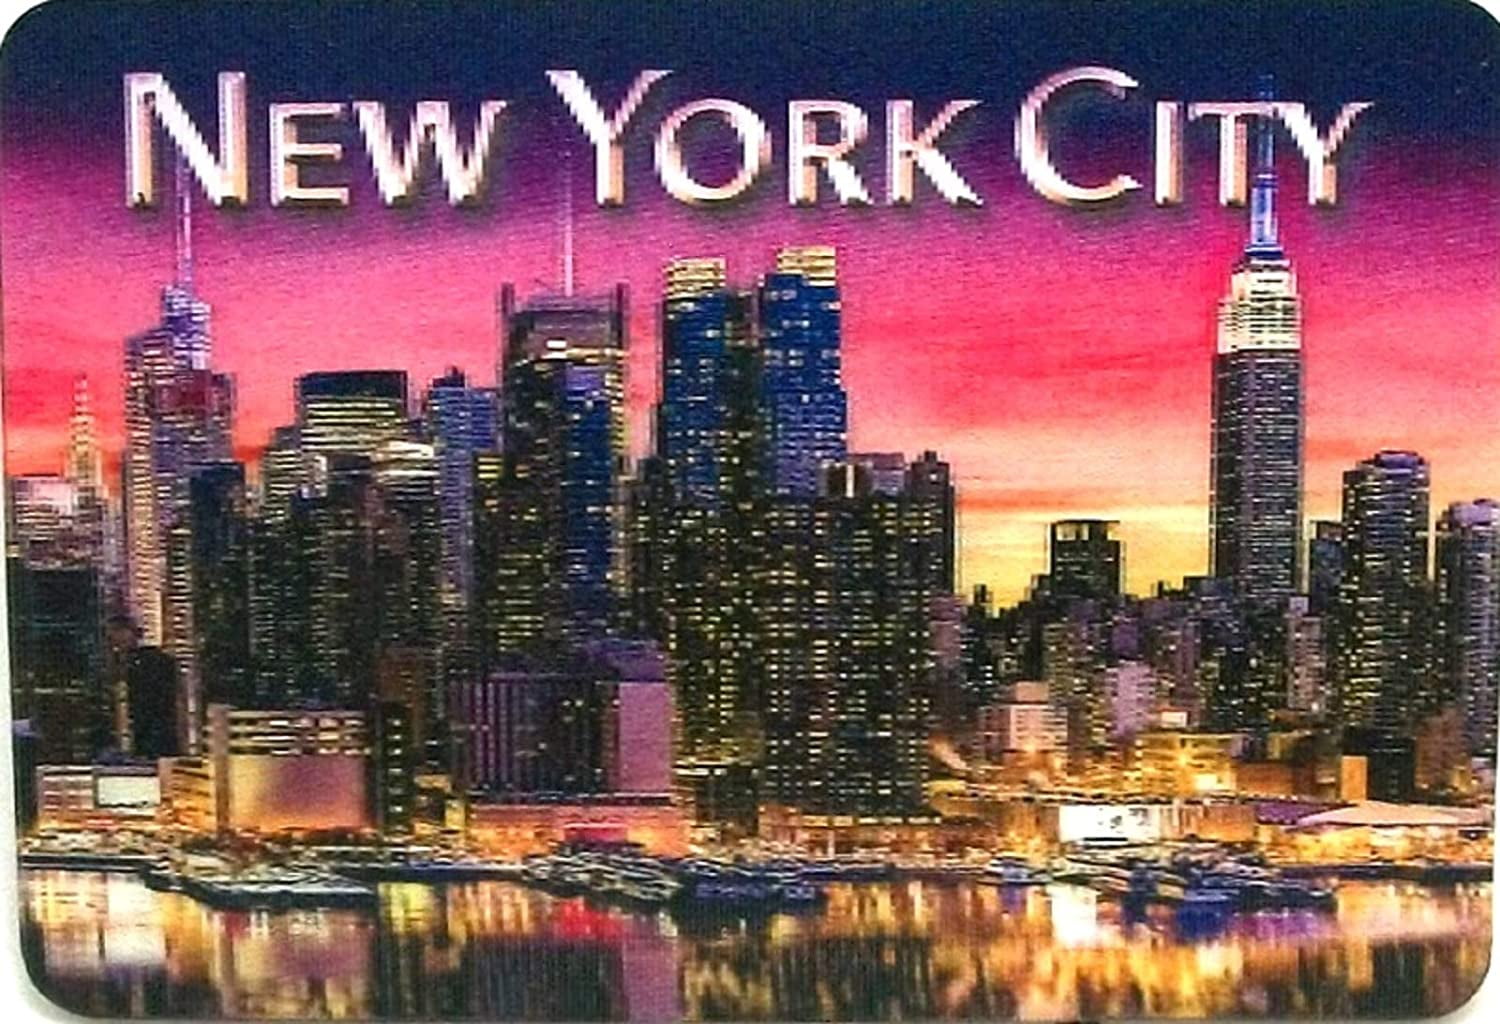 New York City Wall Street Empire State Metall Magnet Souvenir USA 52630 